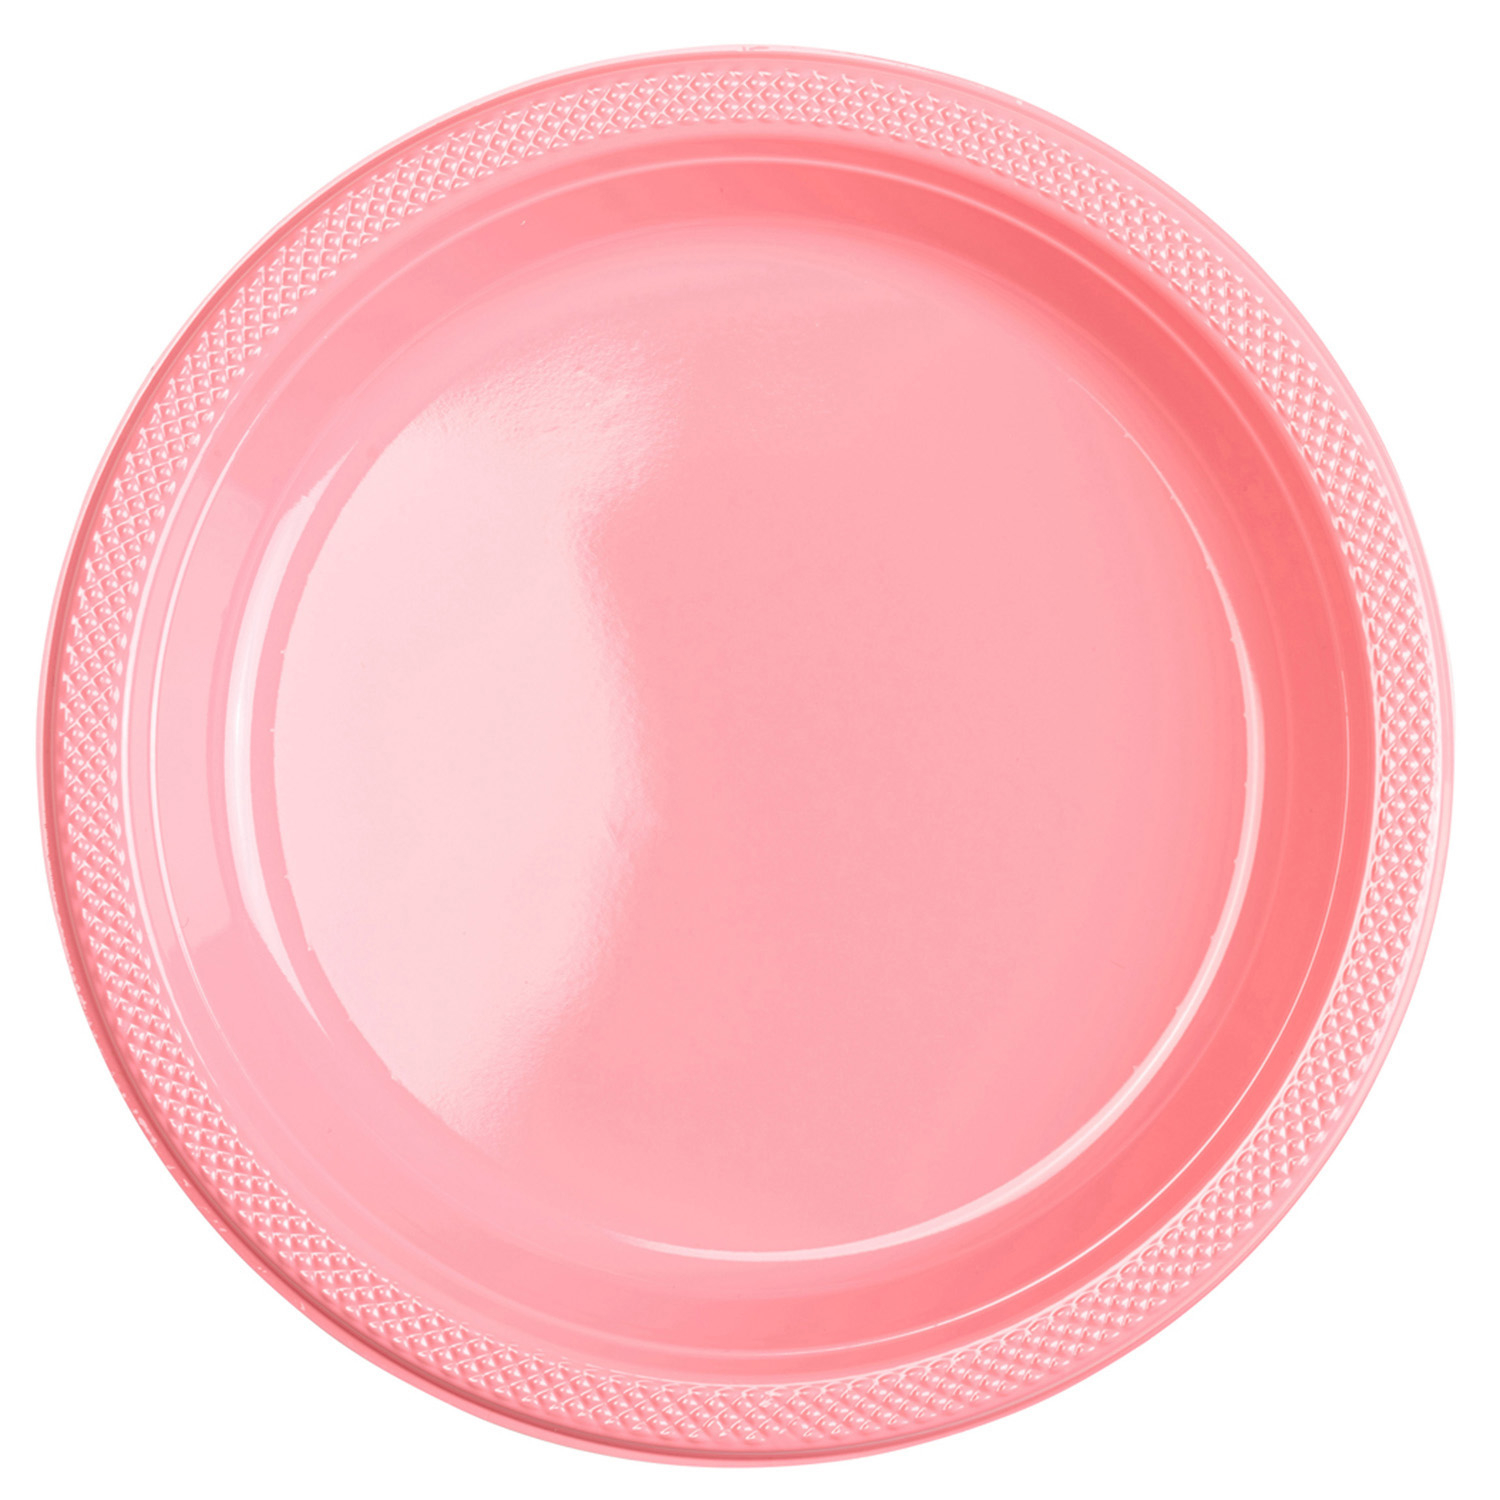 10 Plates Plastic Pretty Pink 22.8 cm Amscan Europe